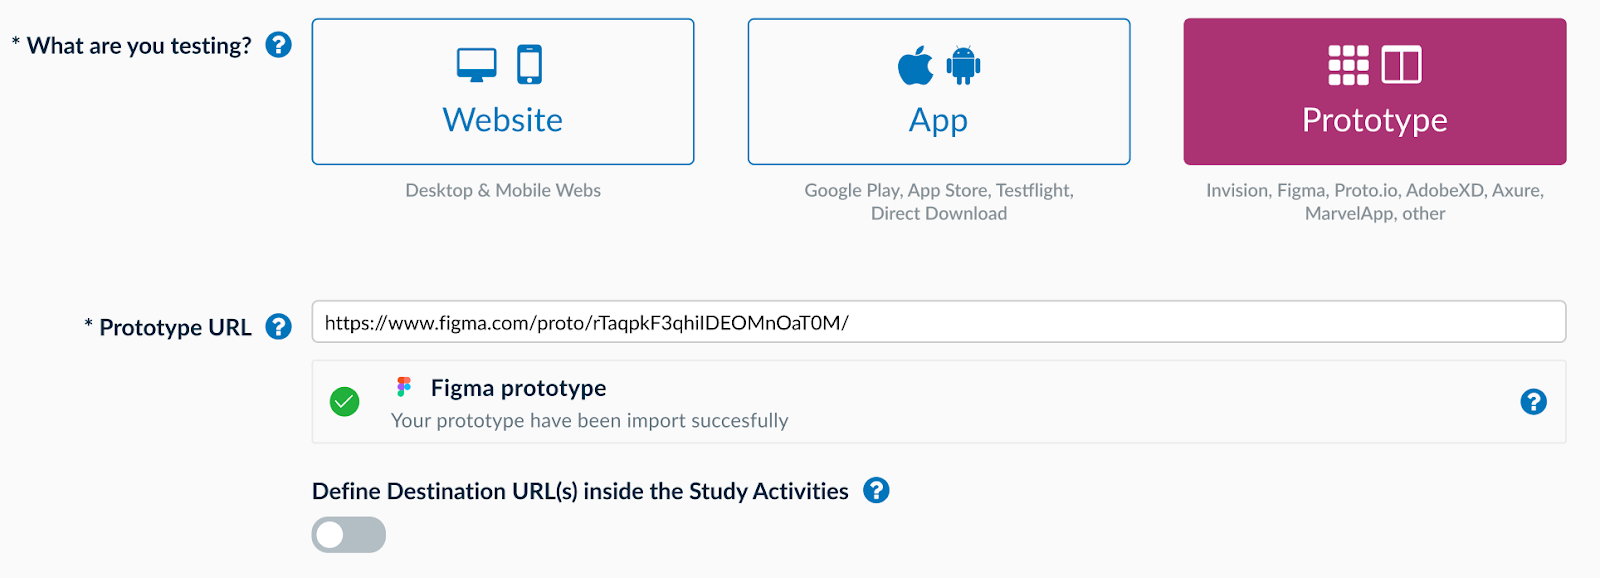 Prototype URL in the Userlytics platform